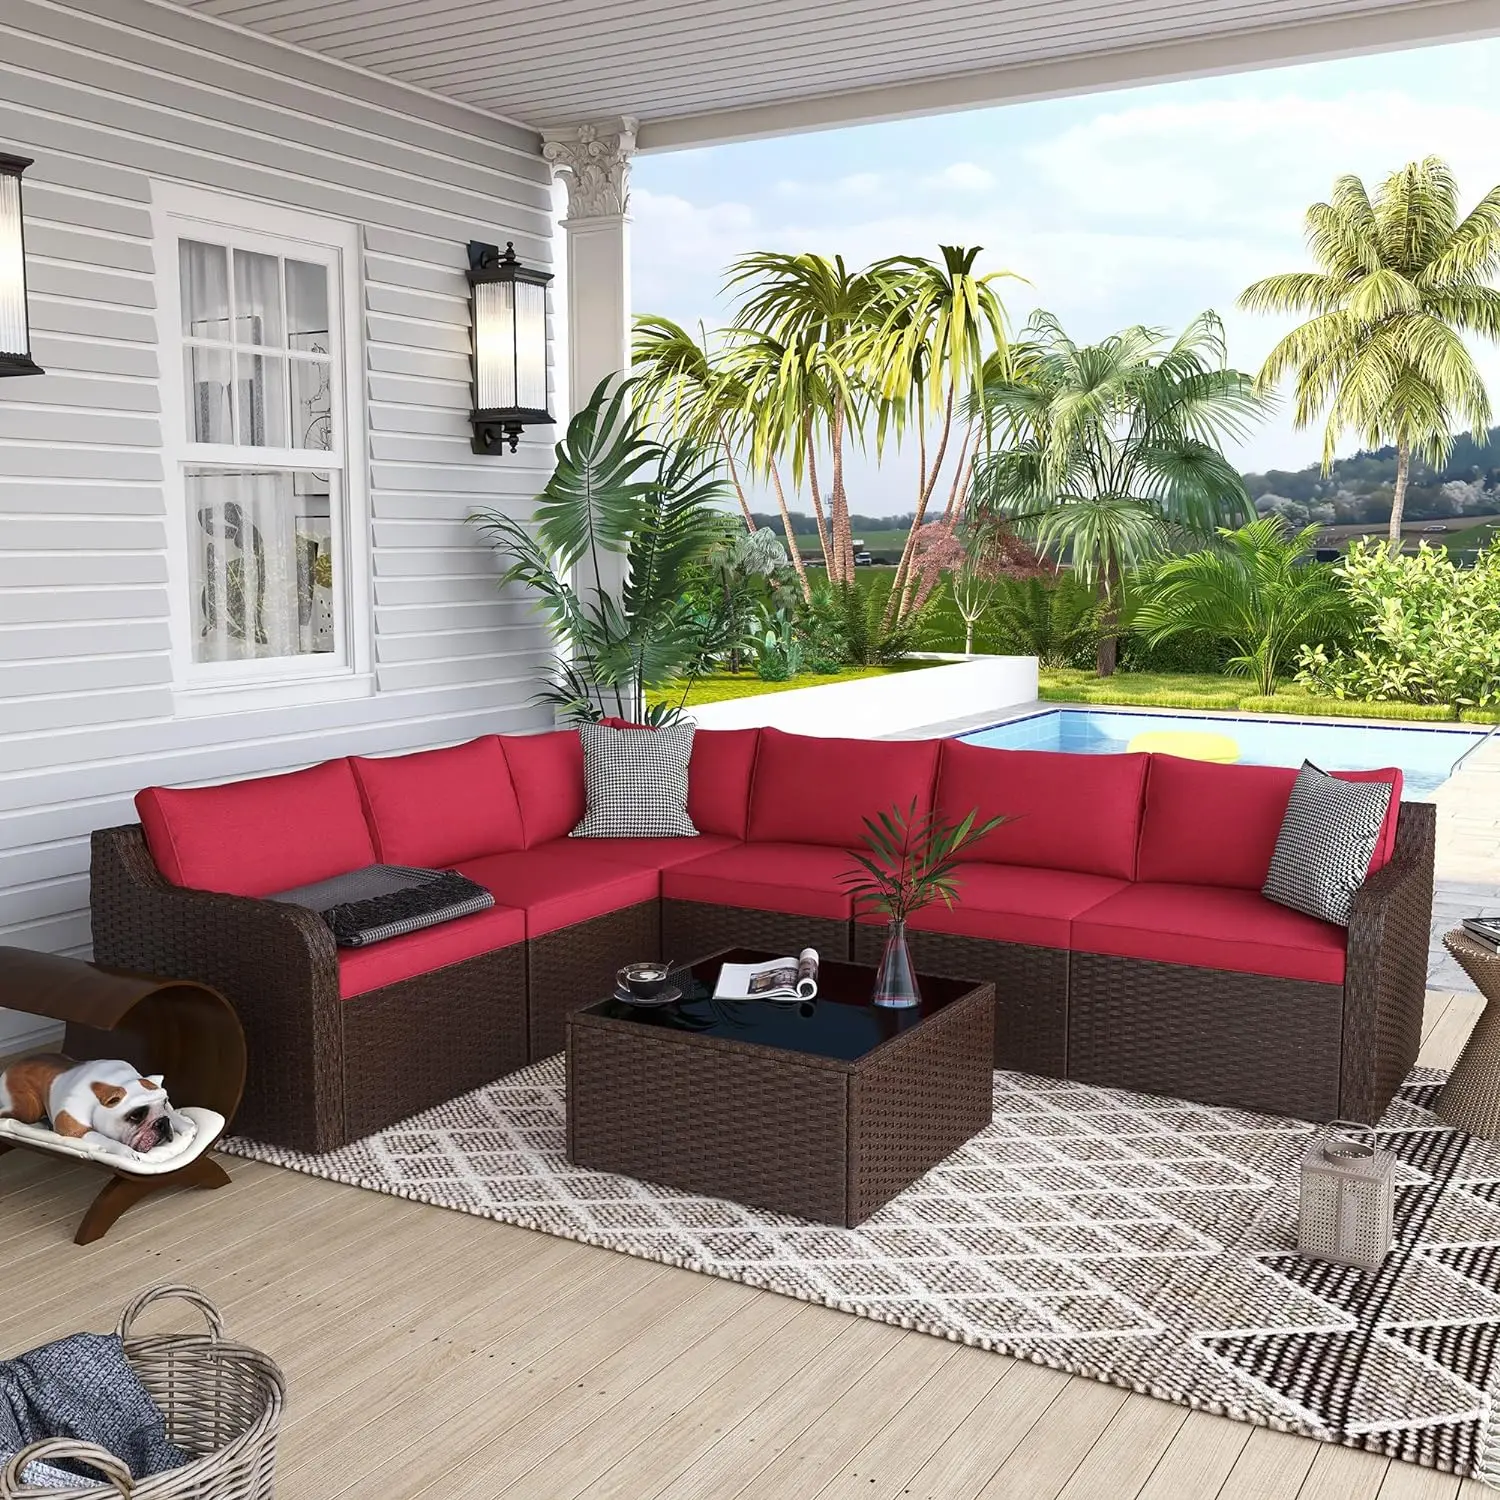 

7pcs High Back Outdoor Furniture Set,PE Rattan Sectional Sofa,Wicker Patio Conversation Set w/ Cushion & Glass Table for Garden